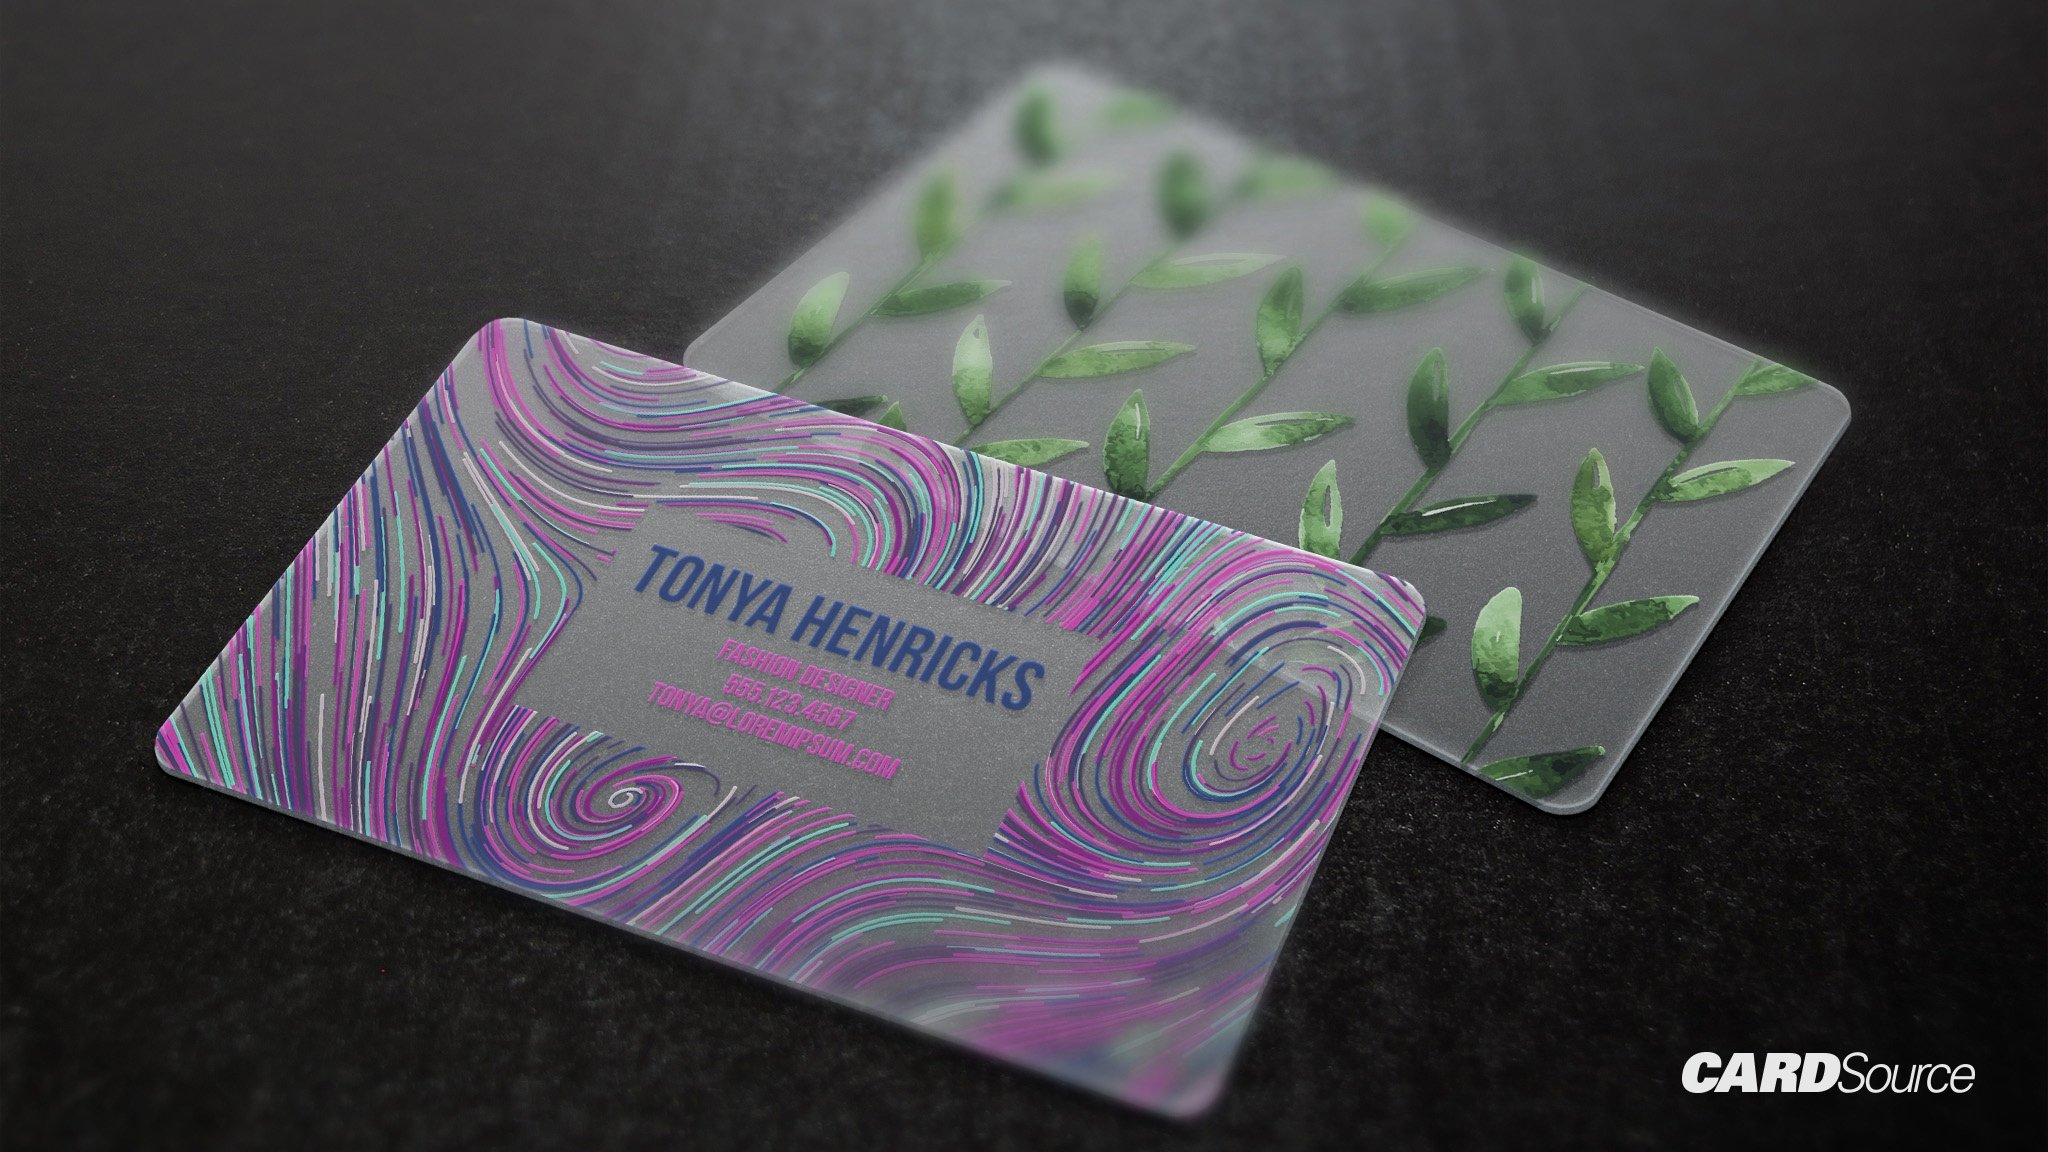 Tonya-Henricks-Clear-Card